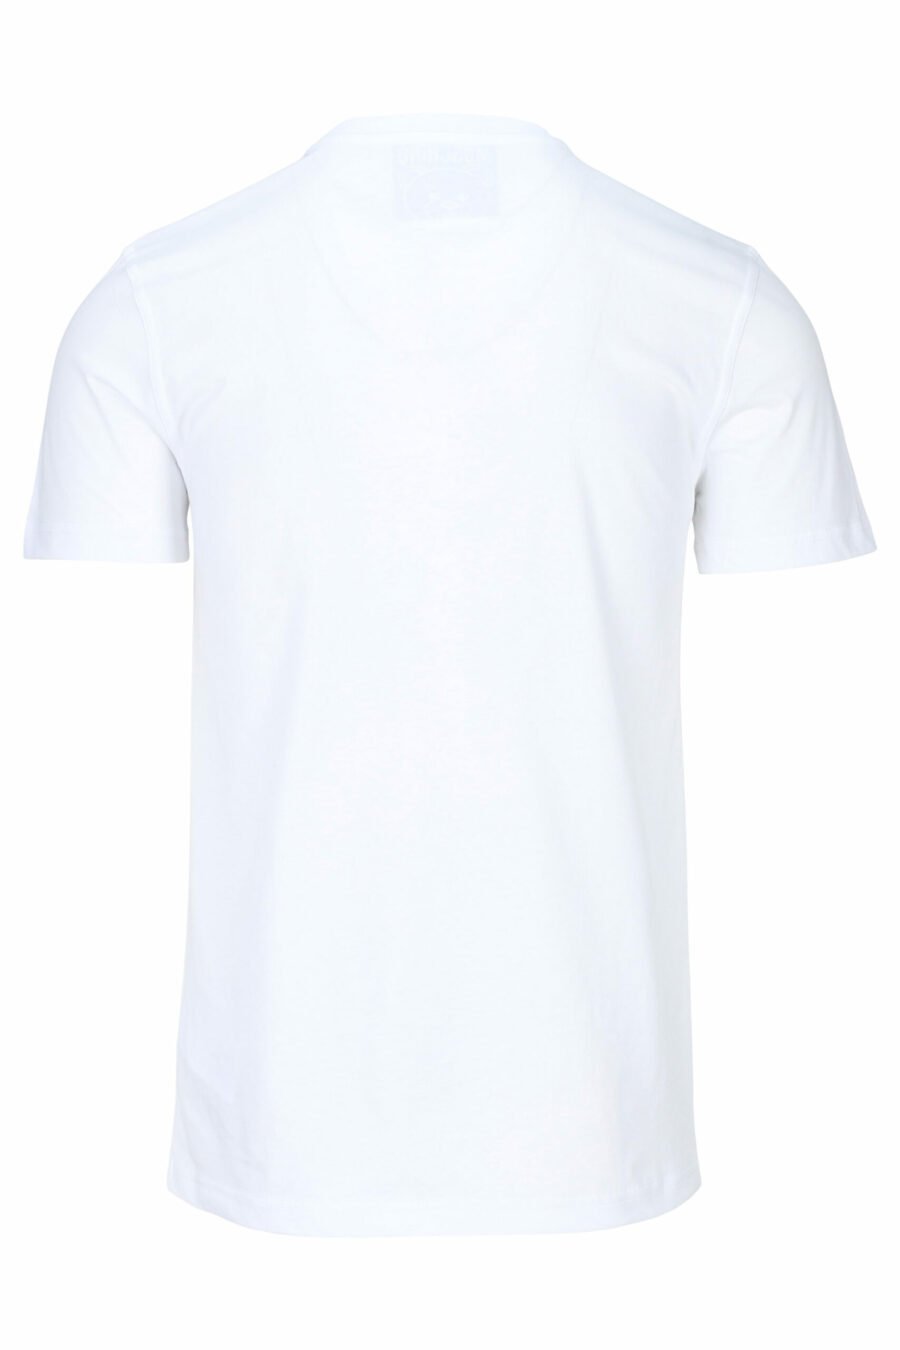 Camiseta blanca con maxilogo "teddy" sastre - 667113108100 1 scaled